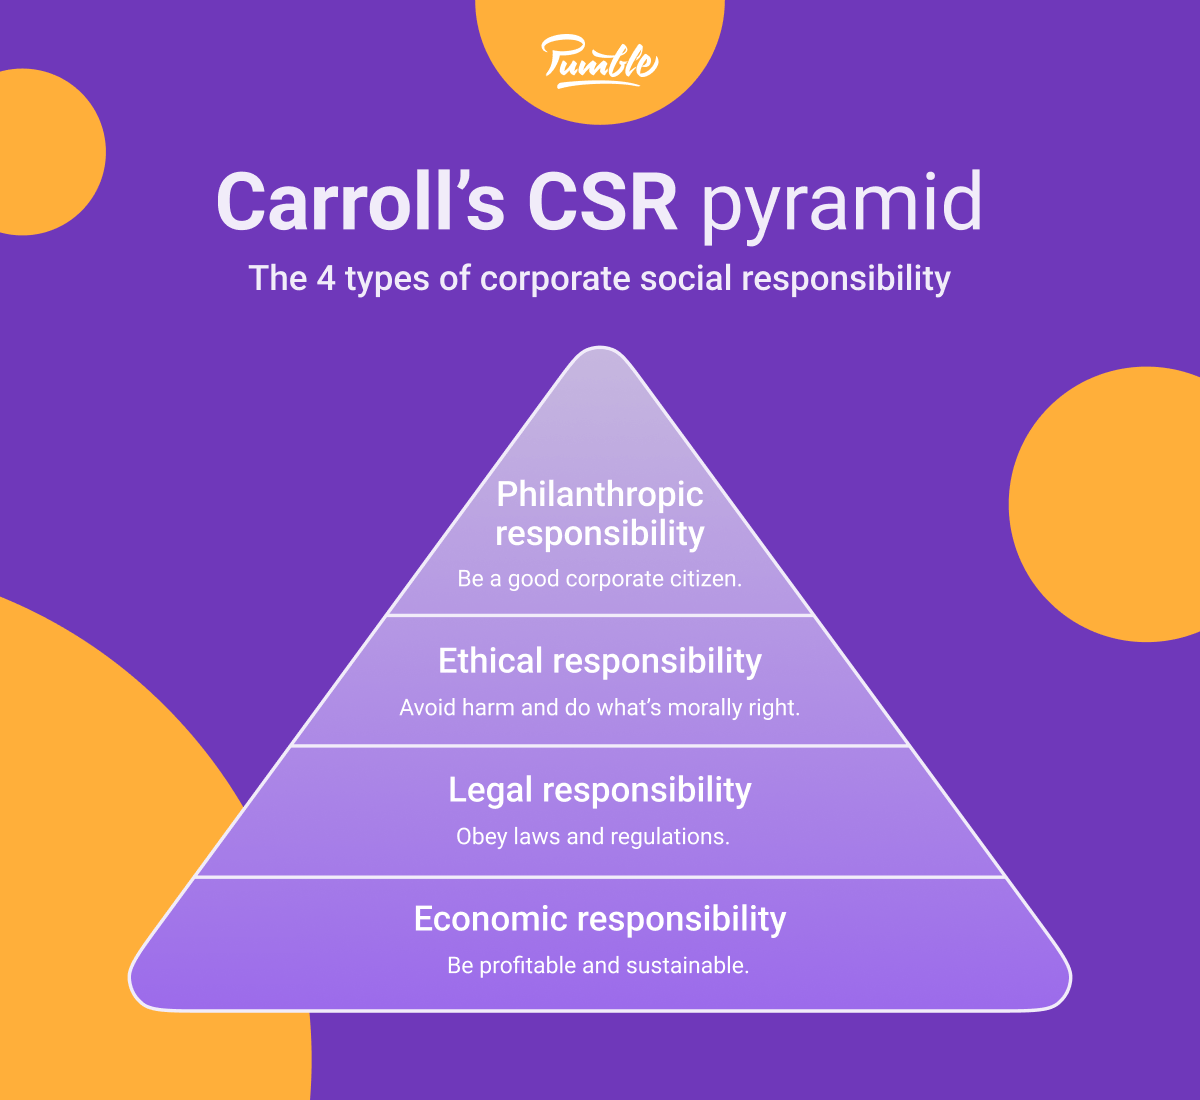 Karroll’s CSR pyramid